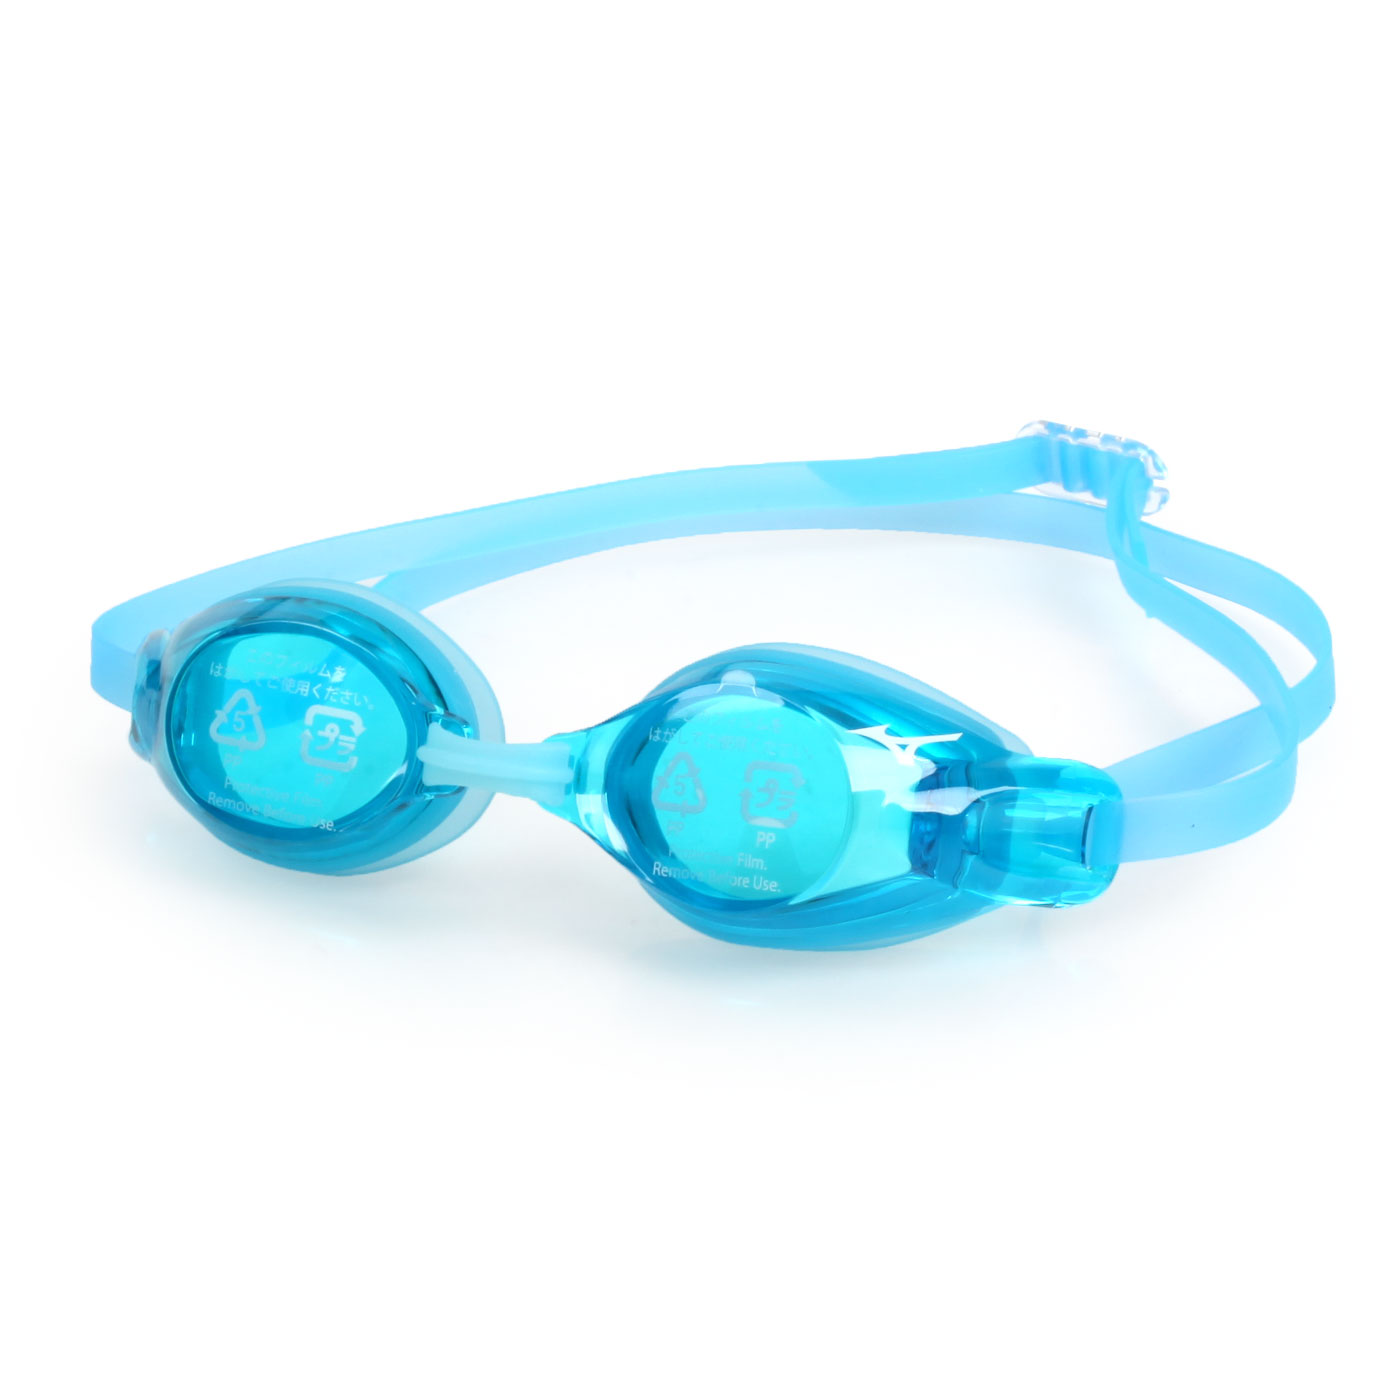 MIZUNO 日製-少年用競賽泳鏡  SWIM85YJ-75100-09 - 水藍